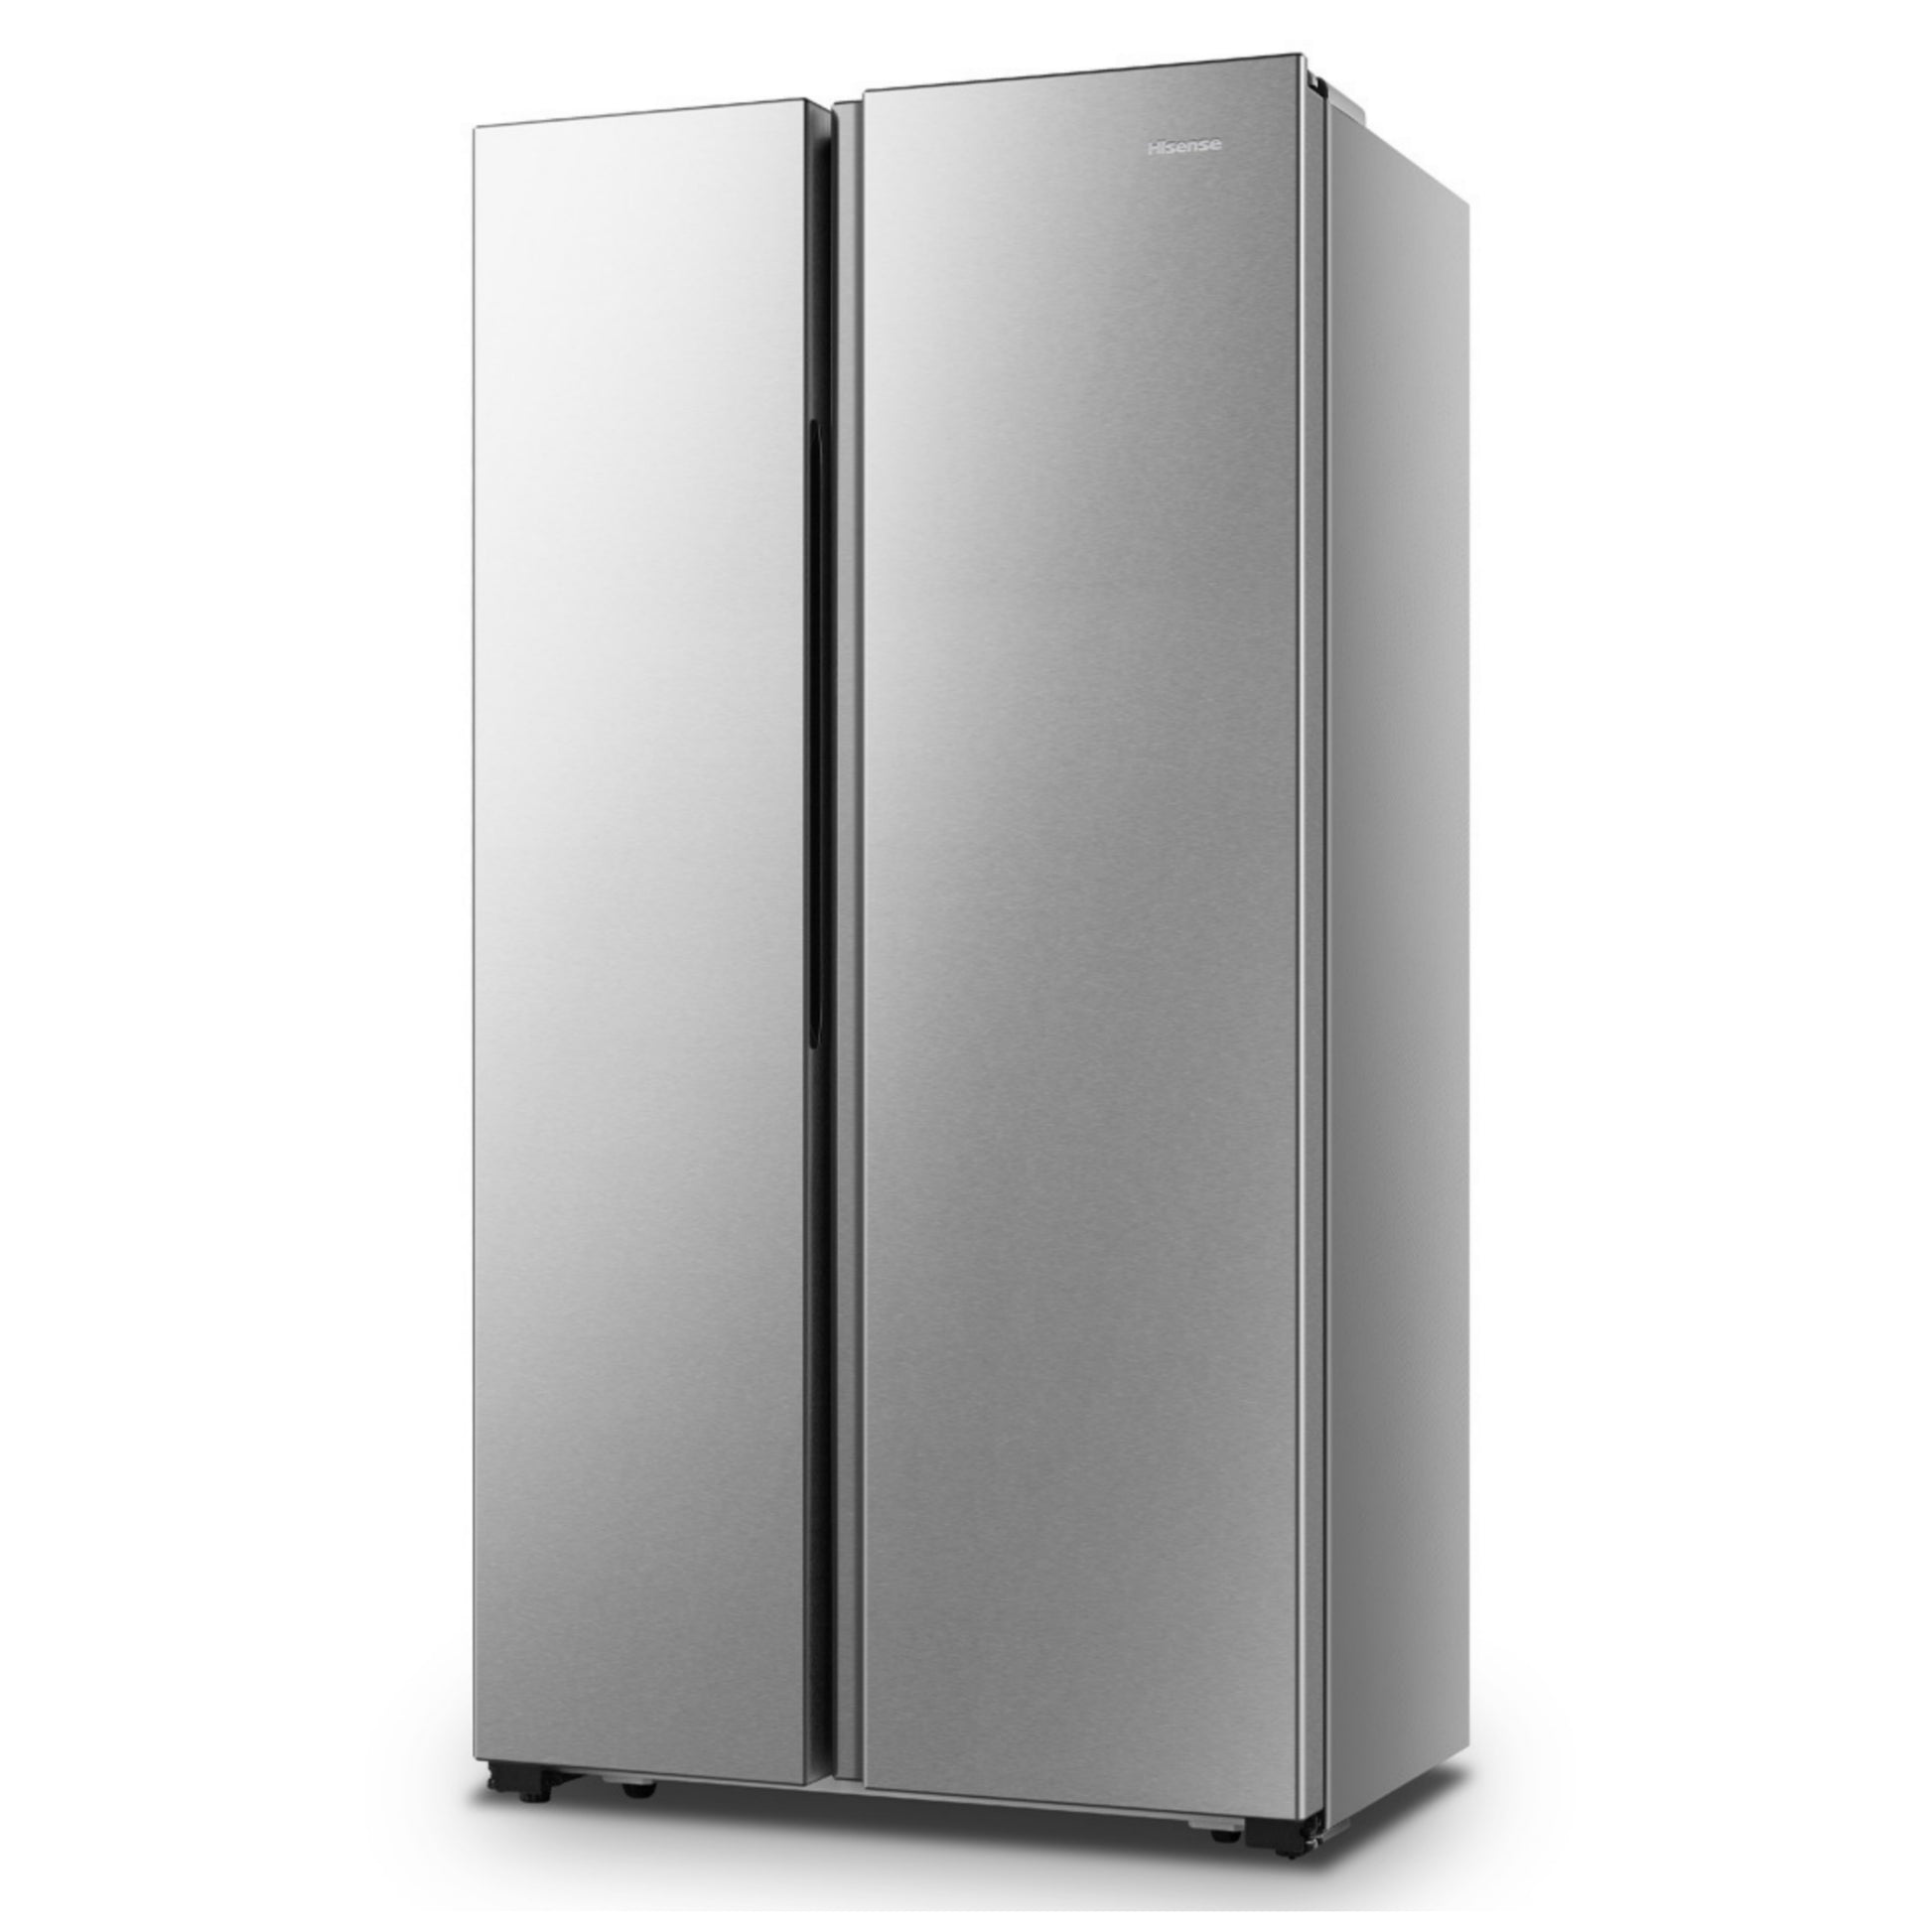 Hisense REF 67WSI 516L Side by Side Refrigerator + 1 Year Warranty - Brand New